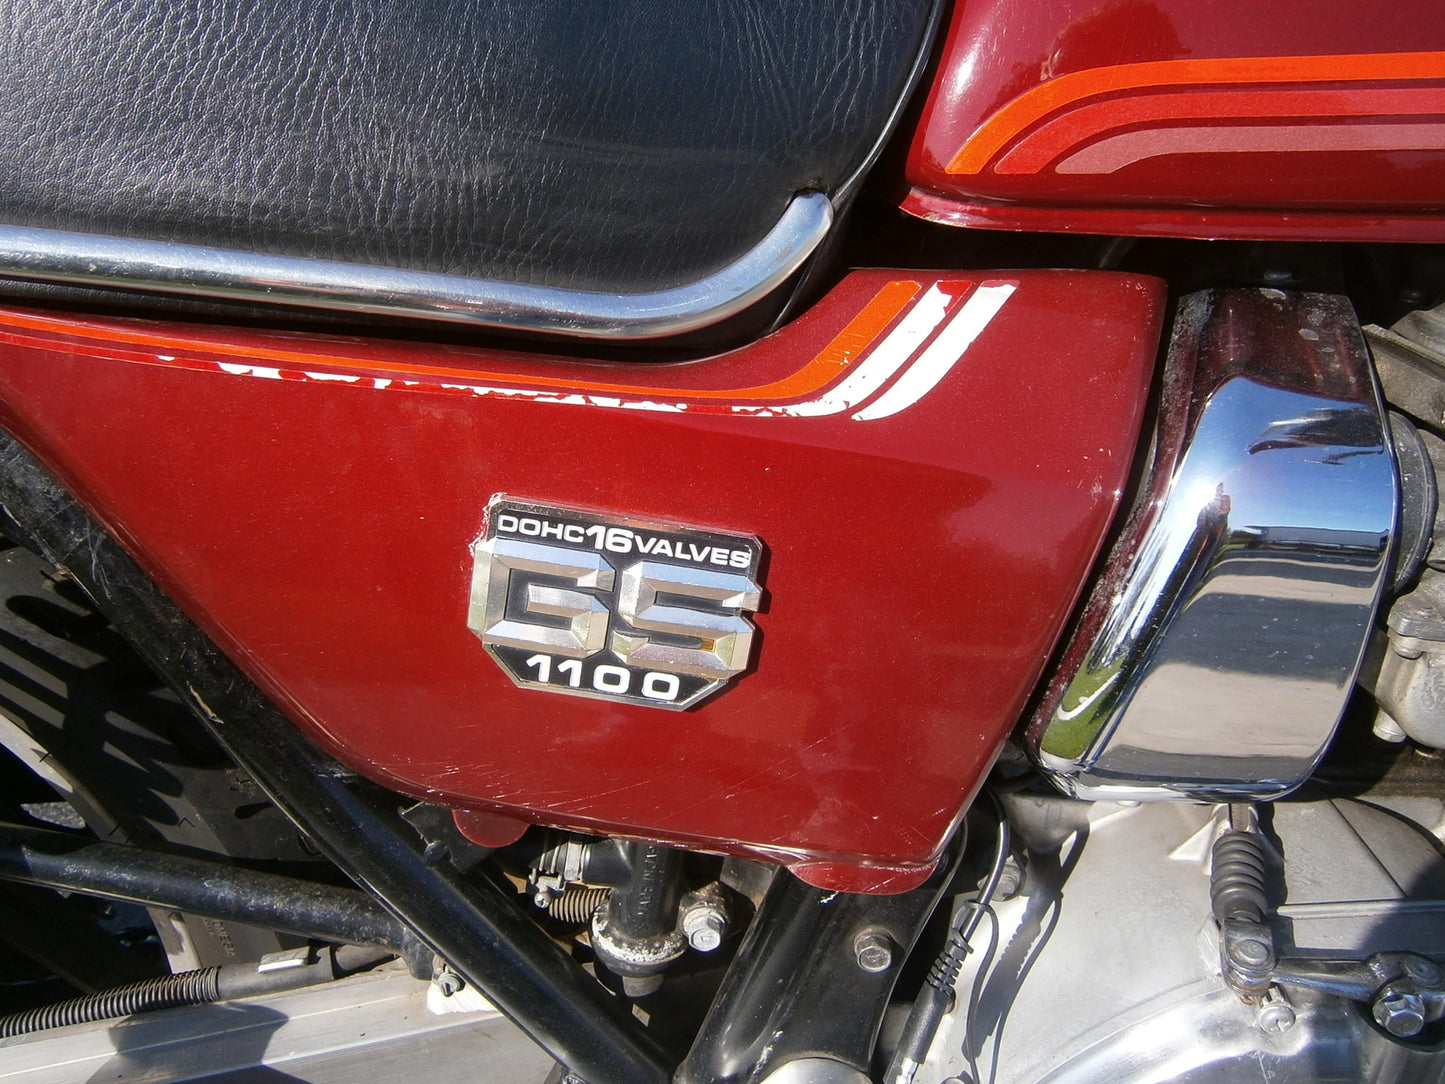 Sold Suzuki 1980 red GS1100E